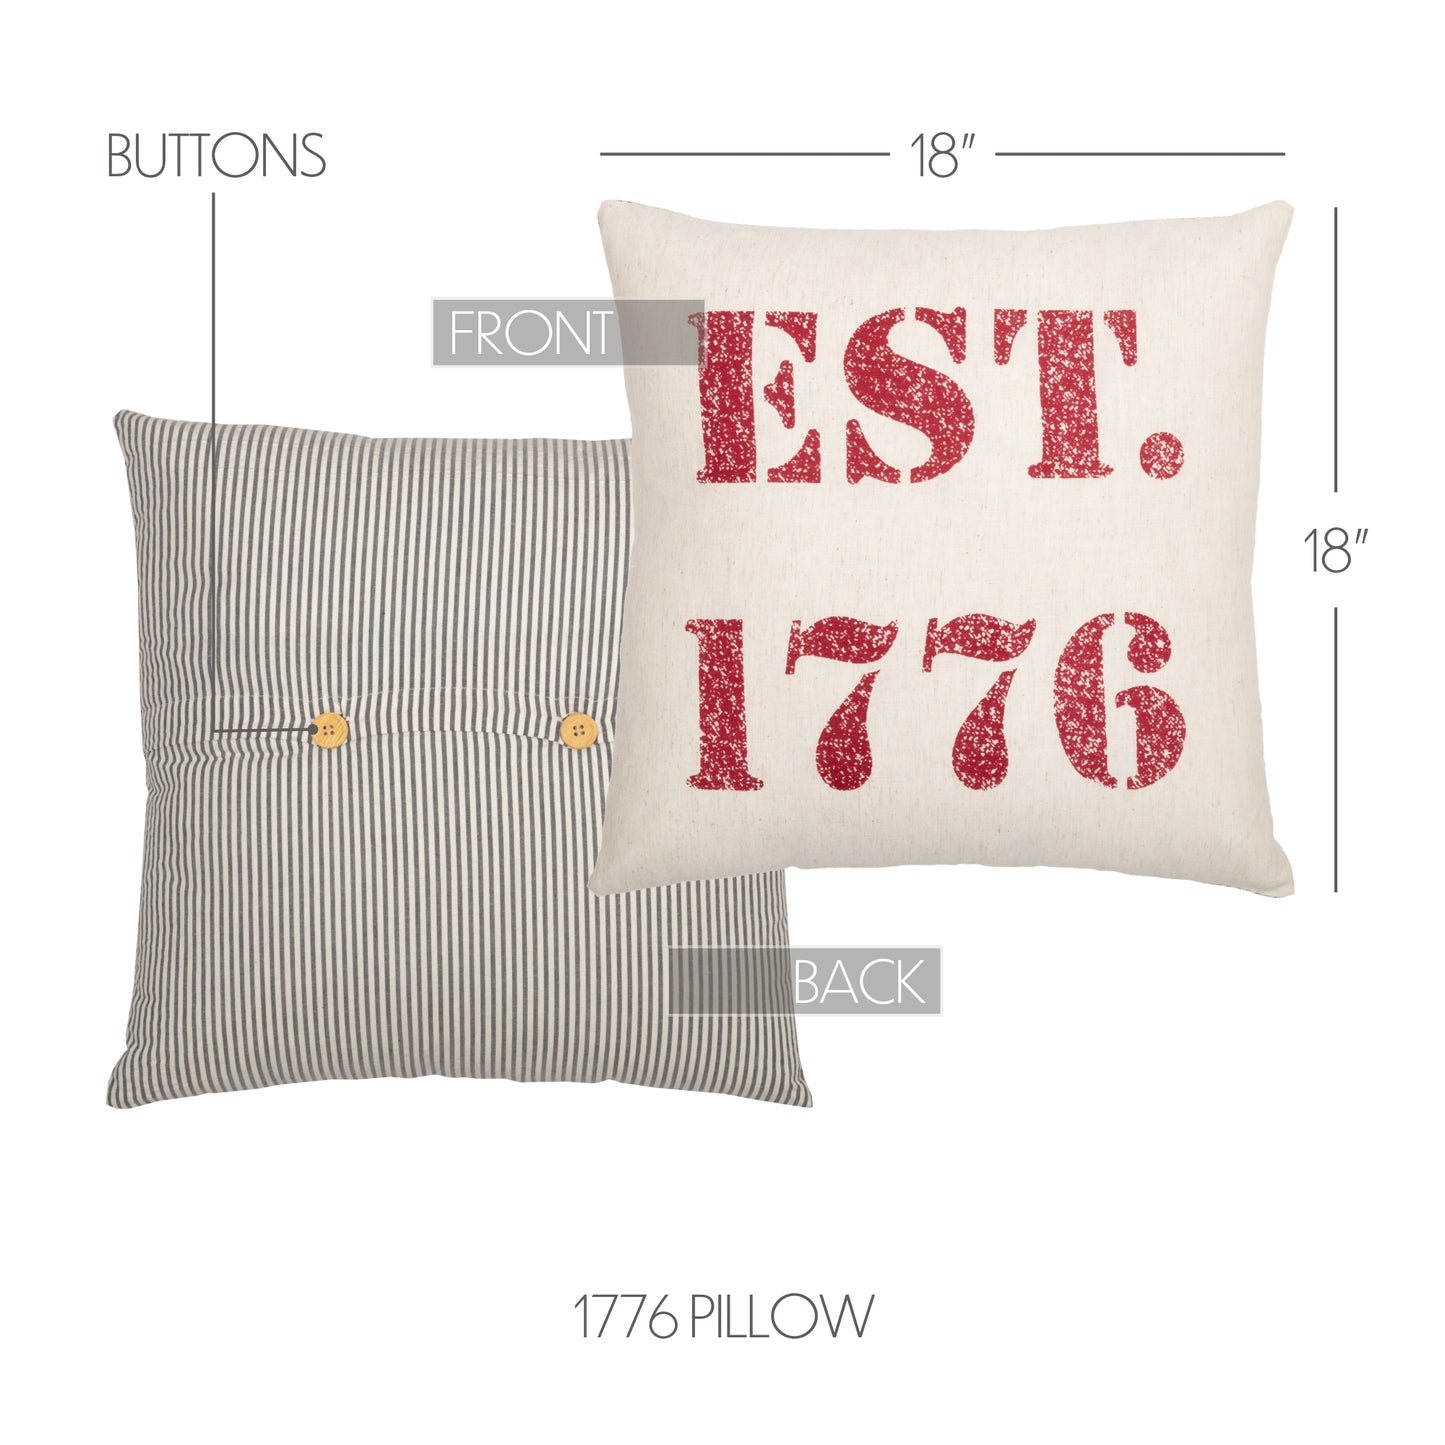 51218-Hatteras-1776-Pillow-18x18-image-1